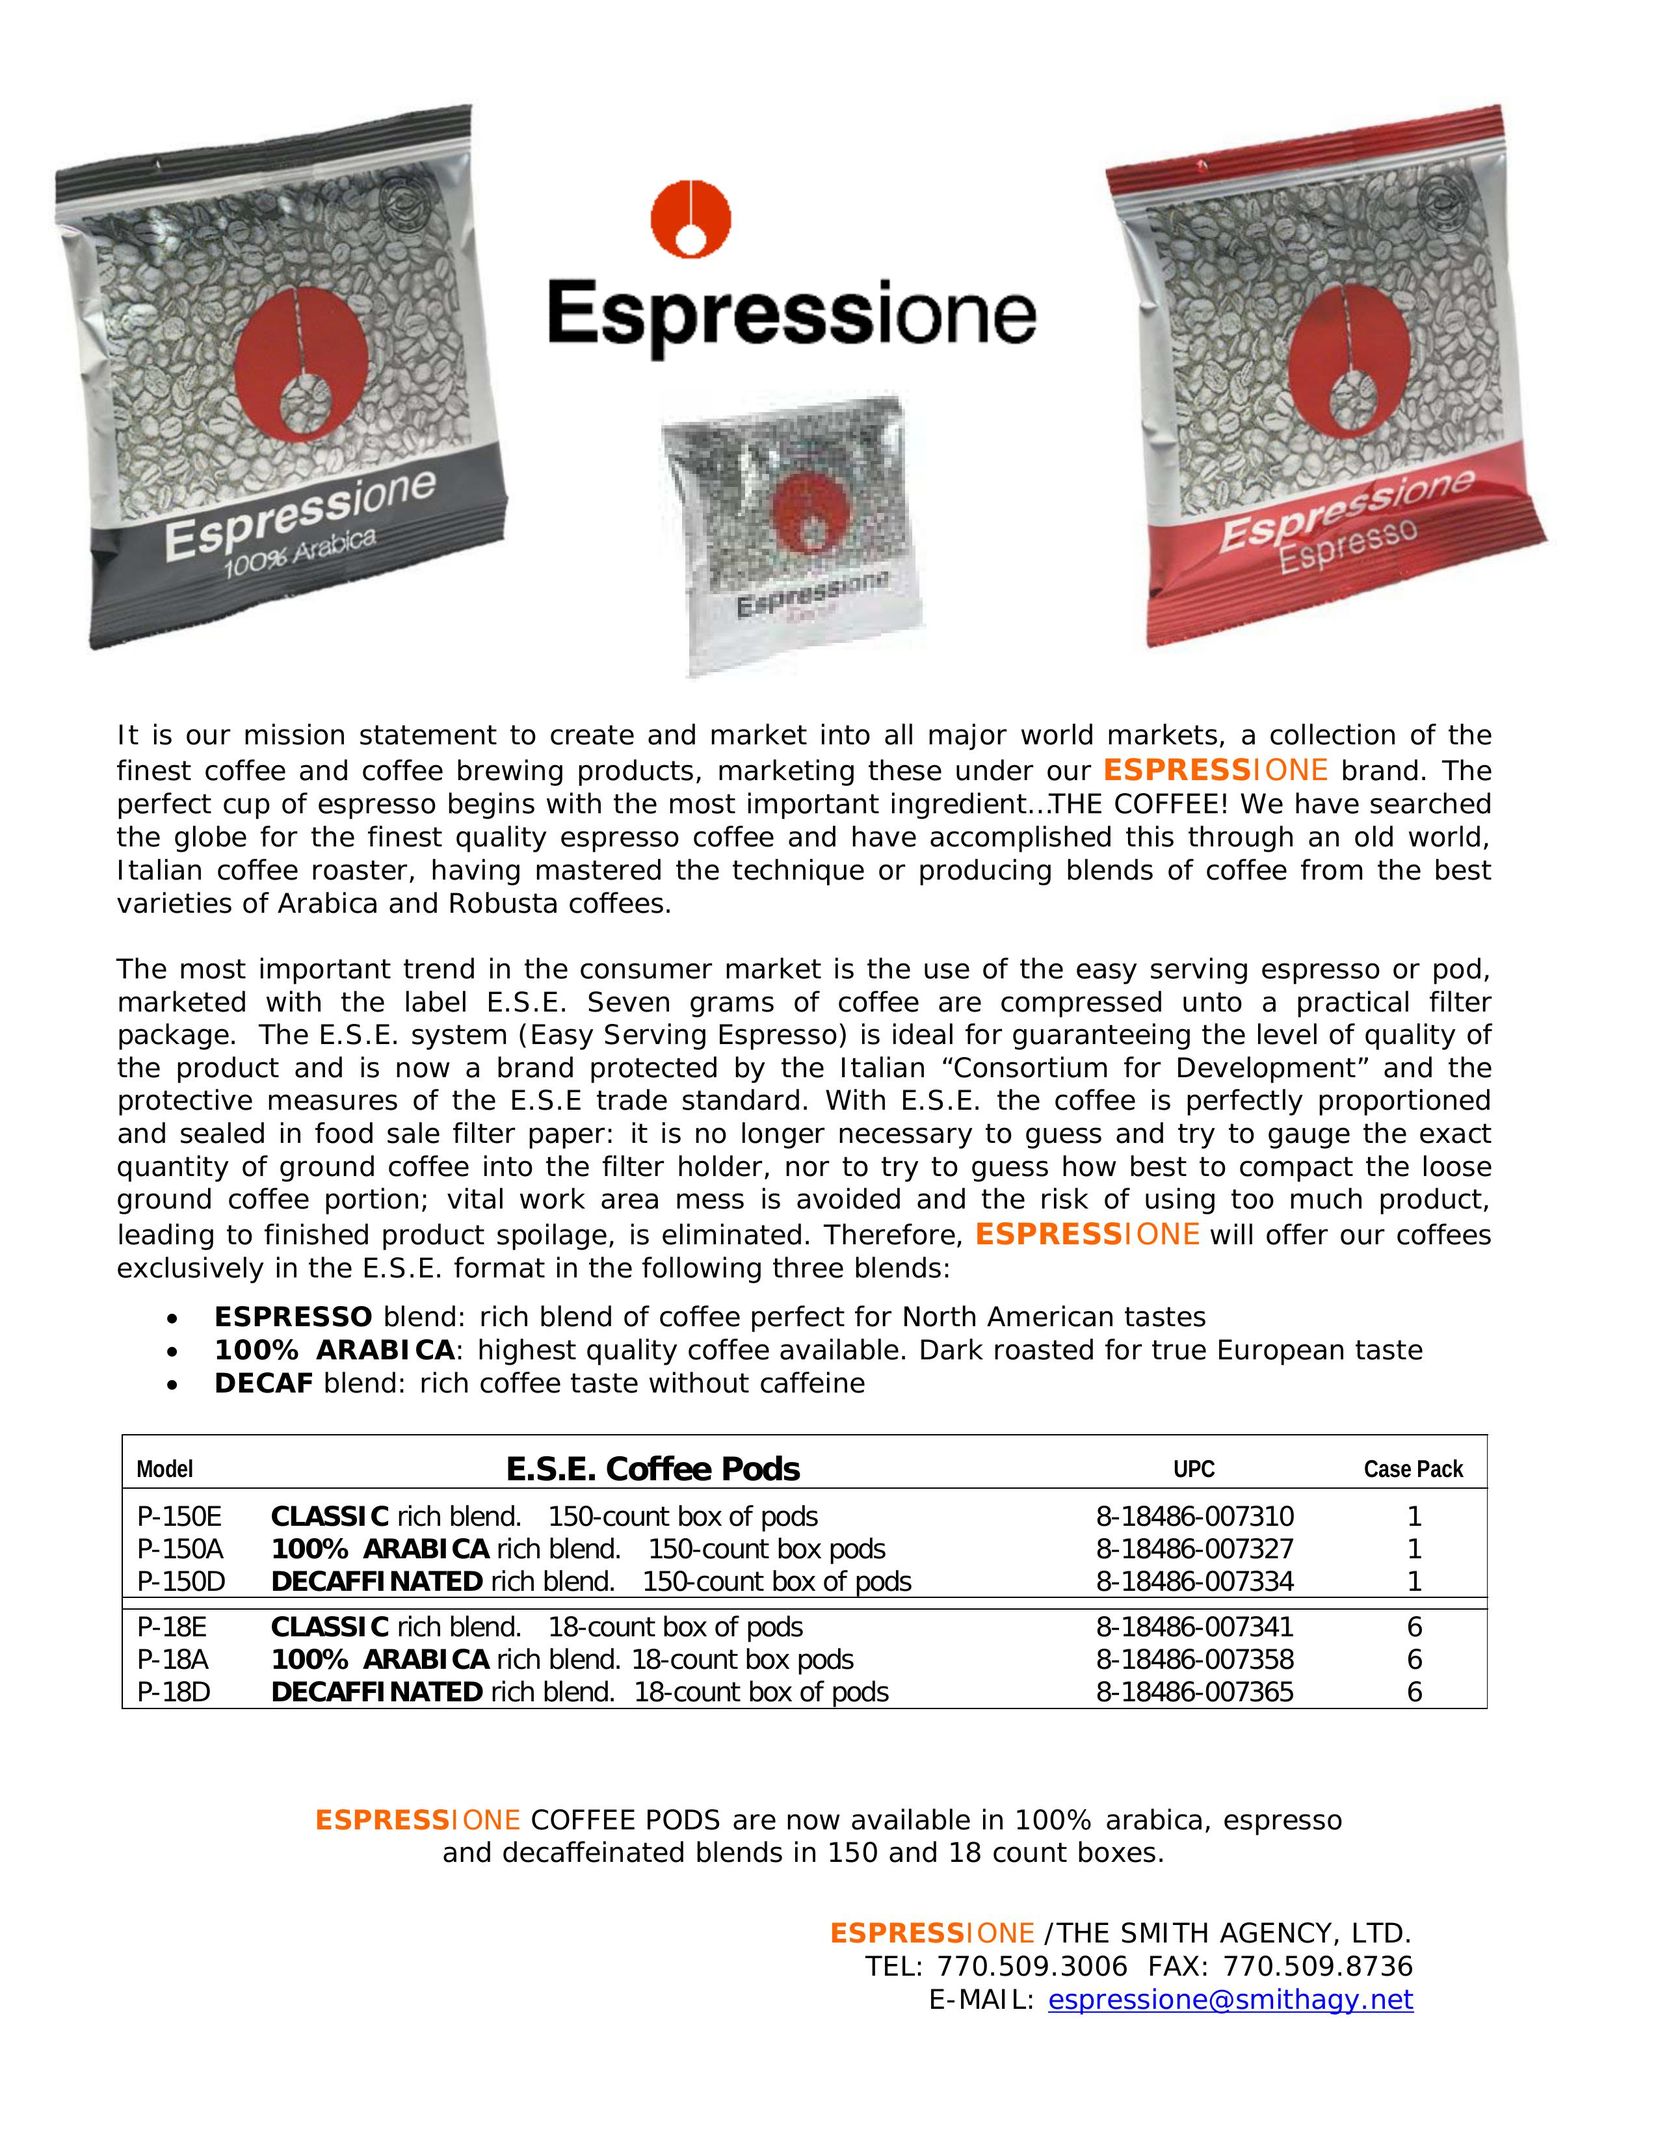 THE SMITH AGENCY P-150E Espresso Maker User Manual